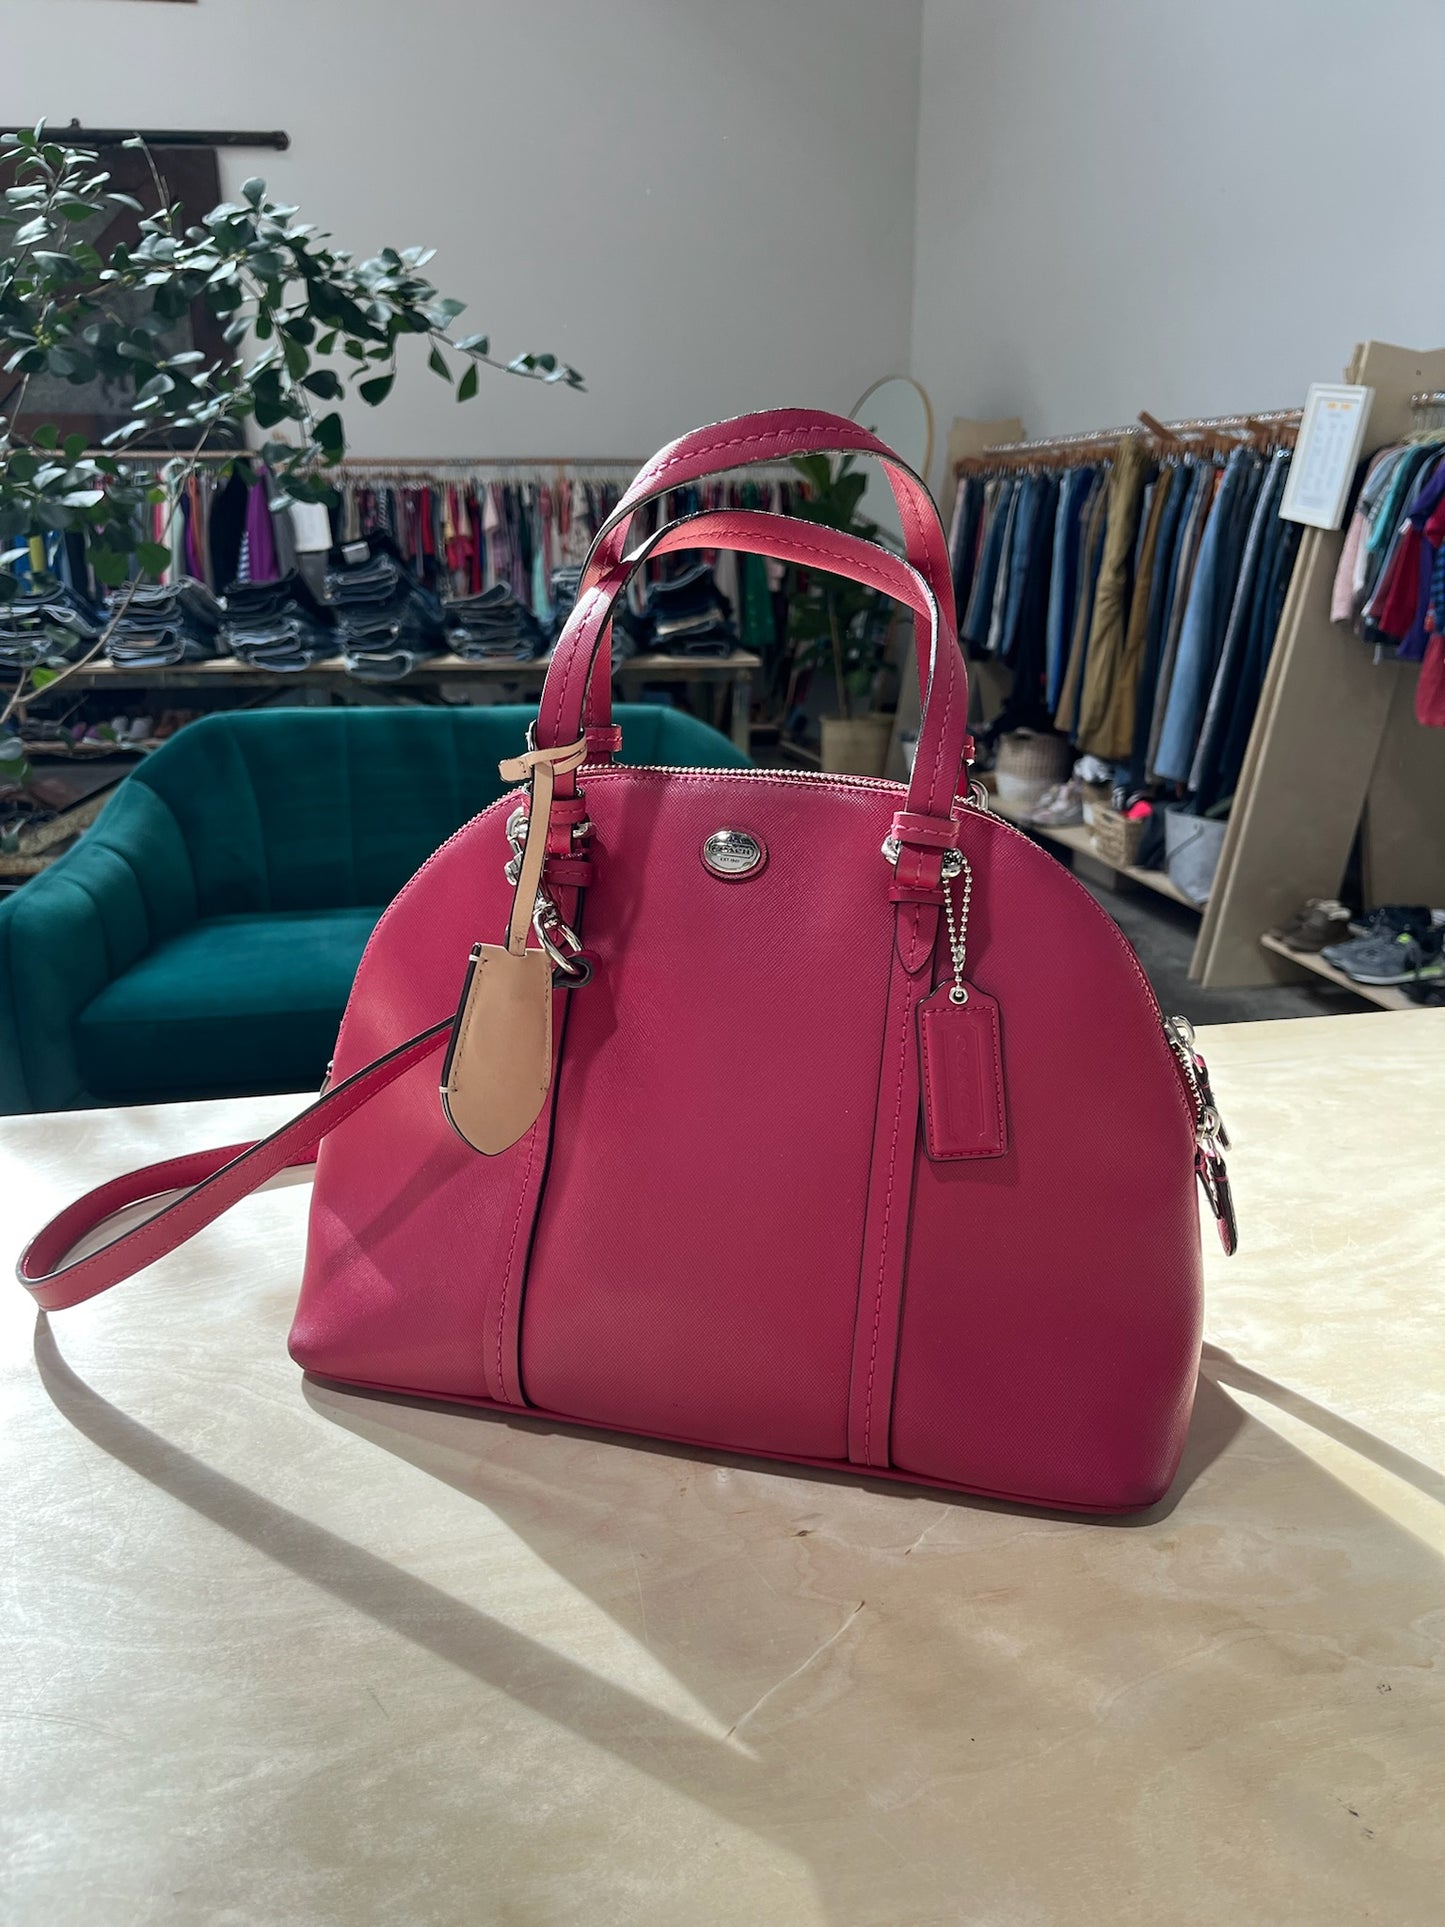 COACH pink handbag